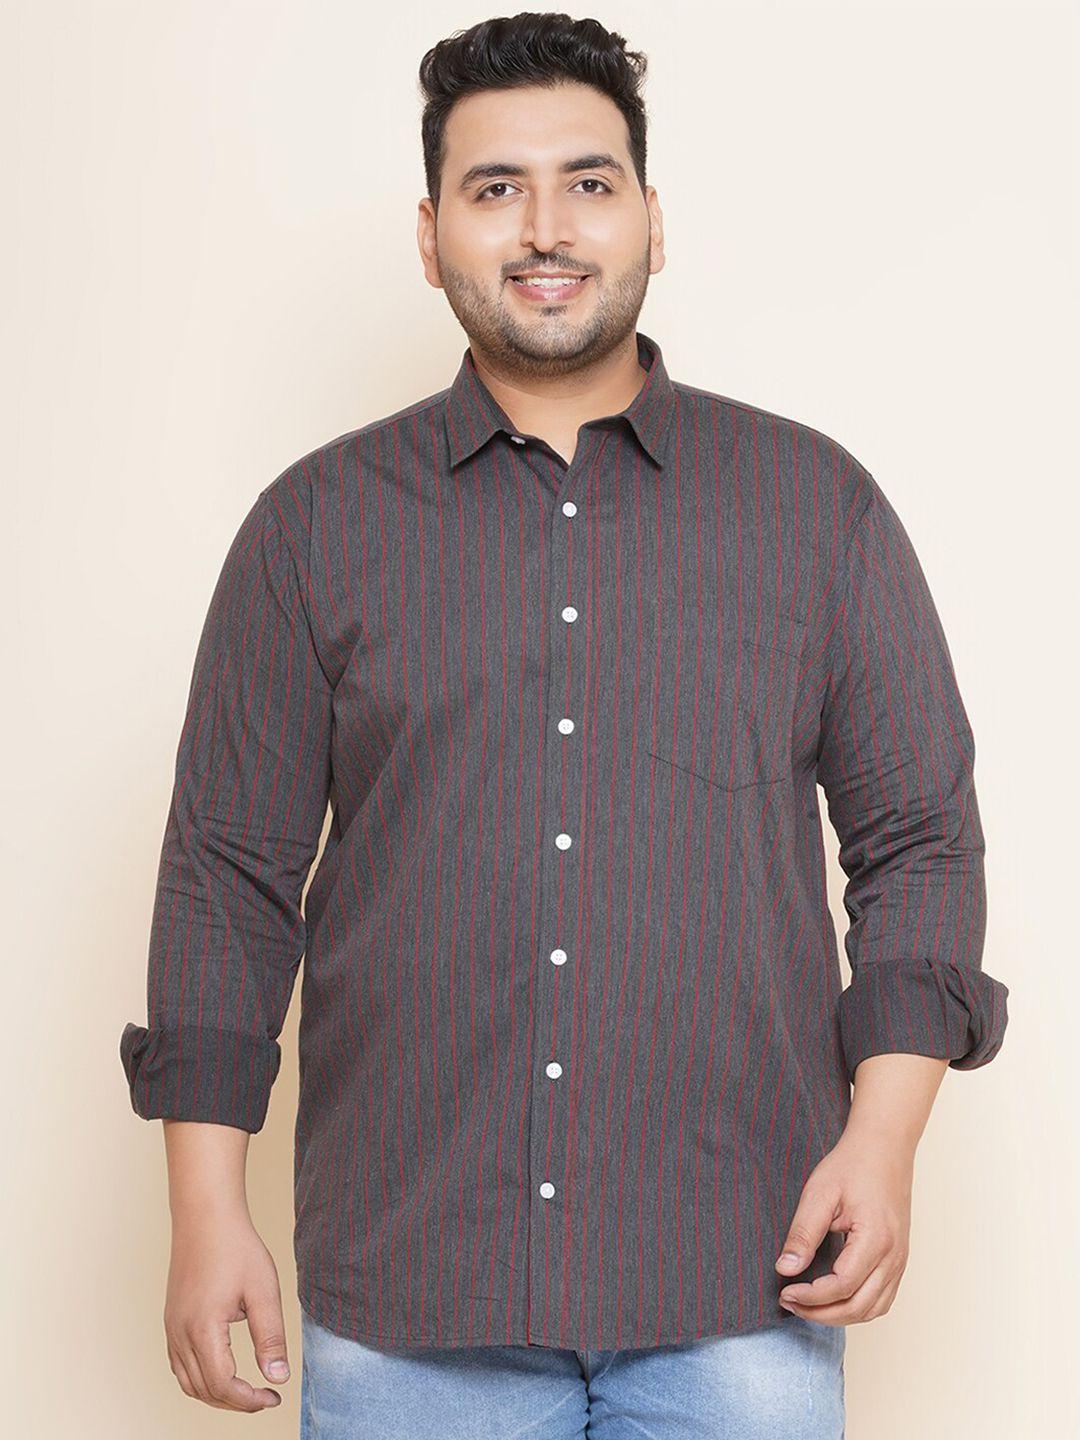 john pride plus size vertical striped regular fit opaque cotton casual shirt